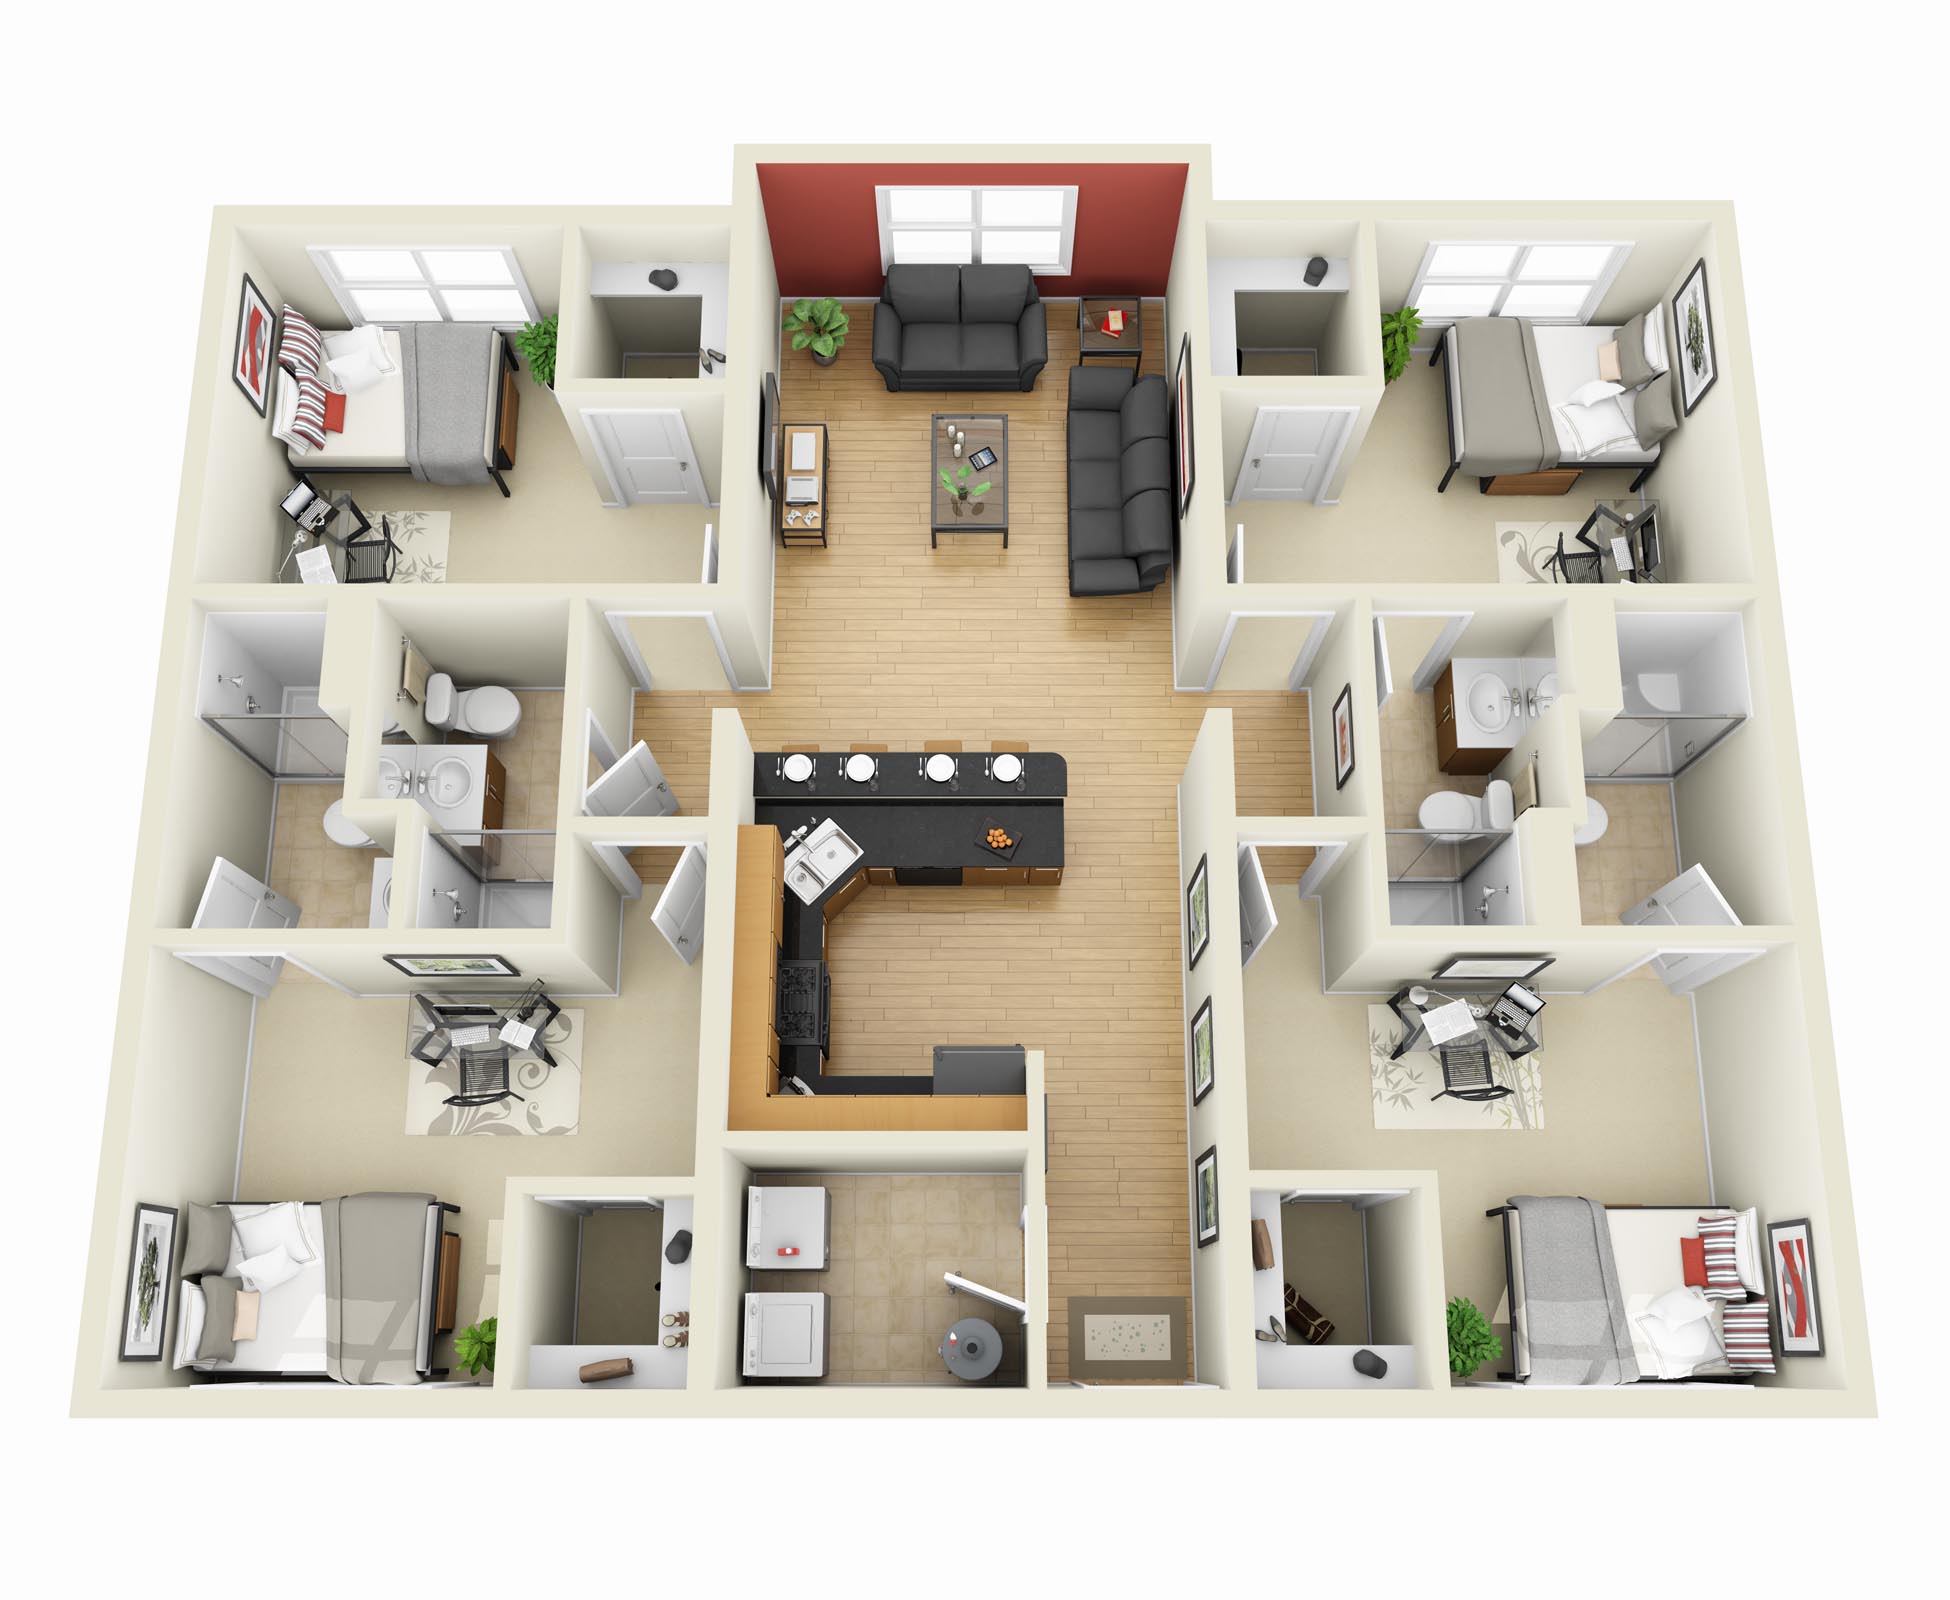 50 Four "4" Bedroom Apartment/House Plans | Architecture ...